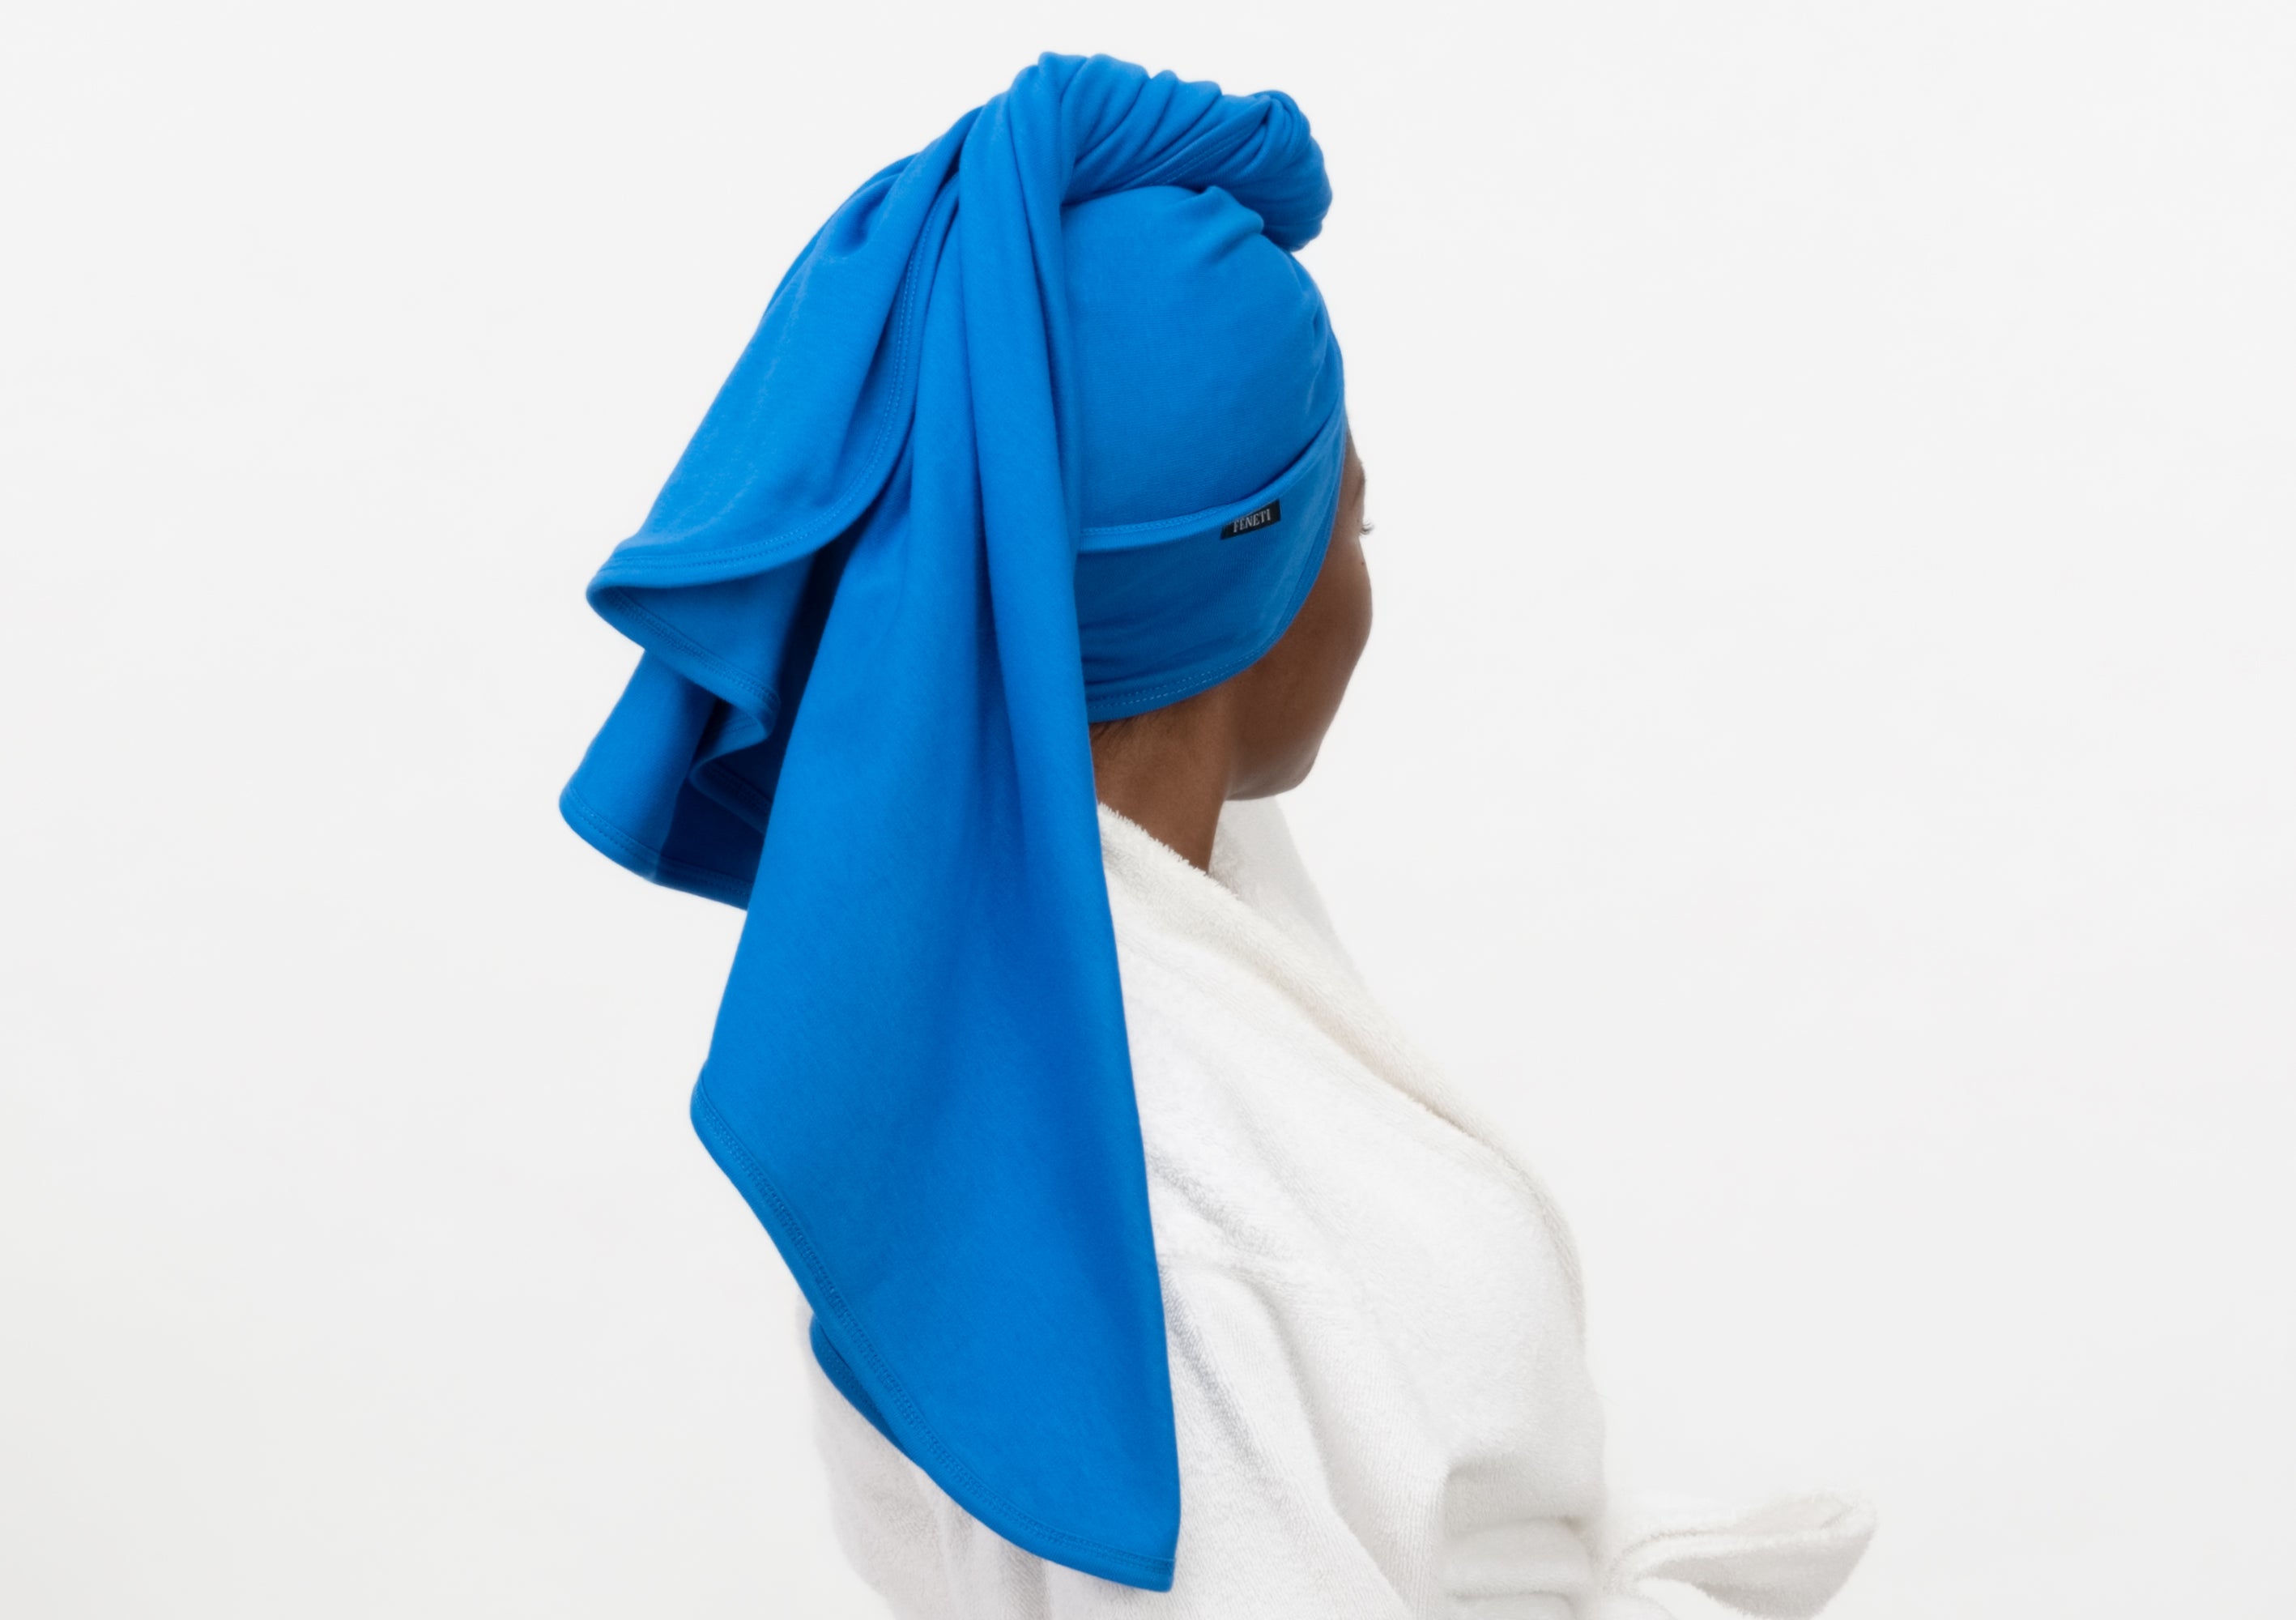 SHETOWEL a natural hair towel, designed for coils, curls and locs. - SHETOWEL